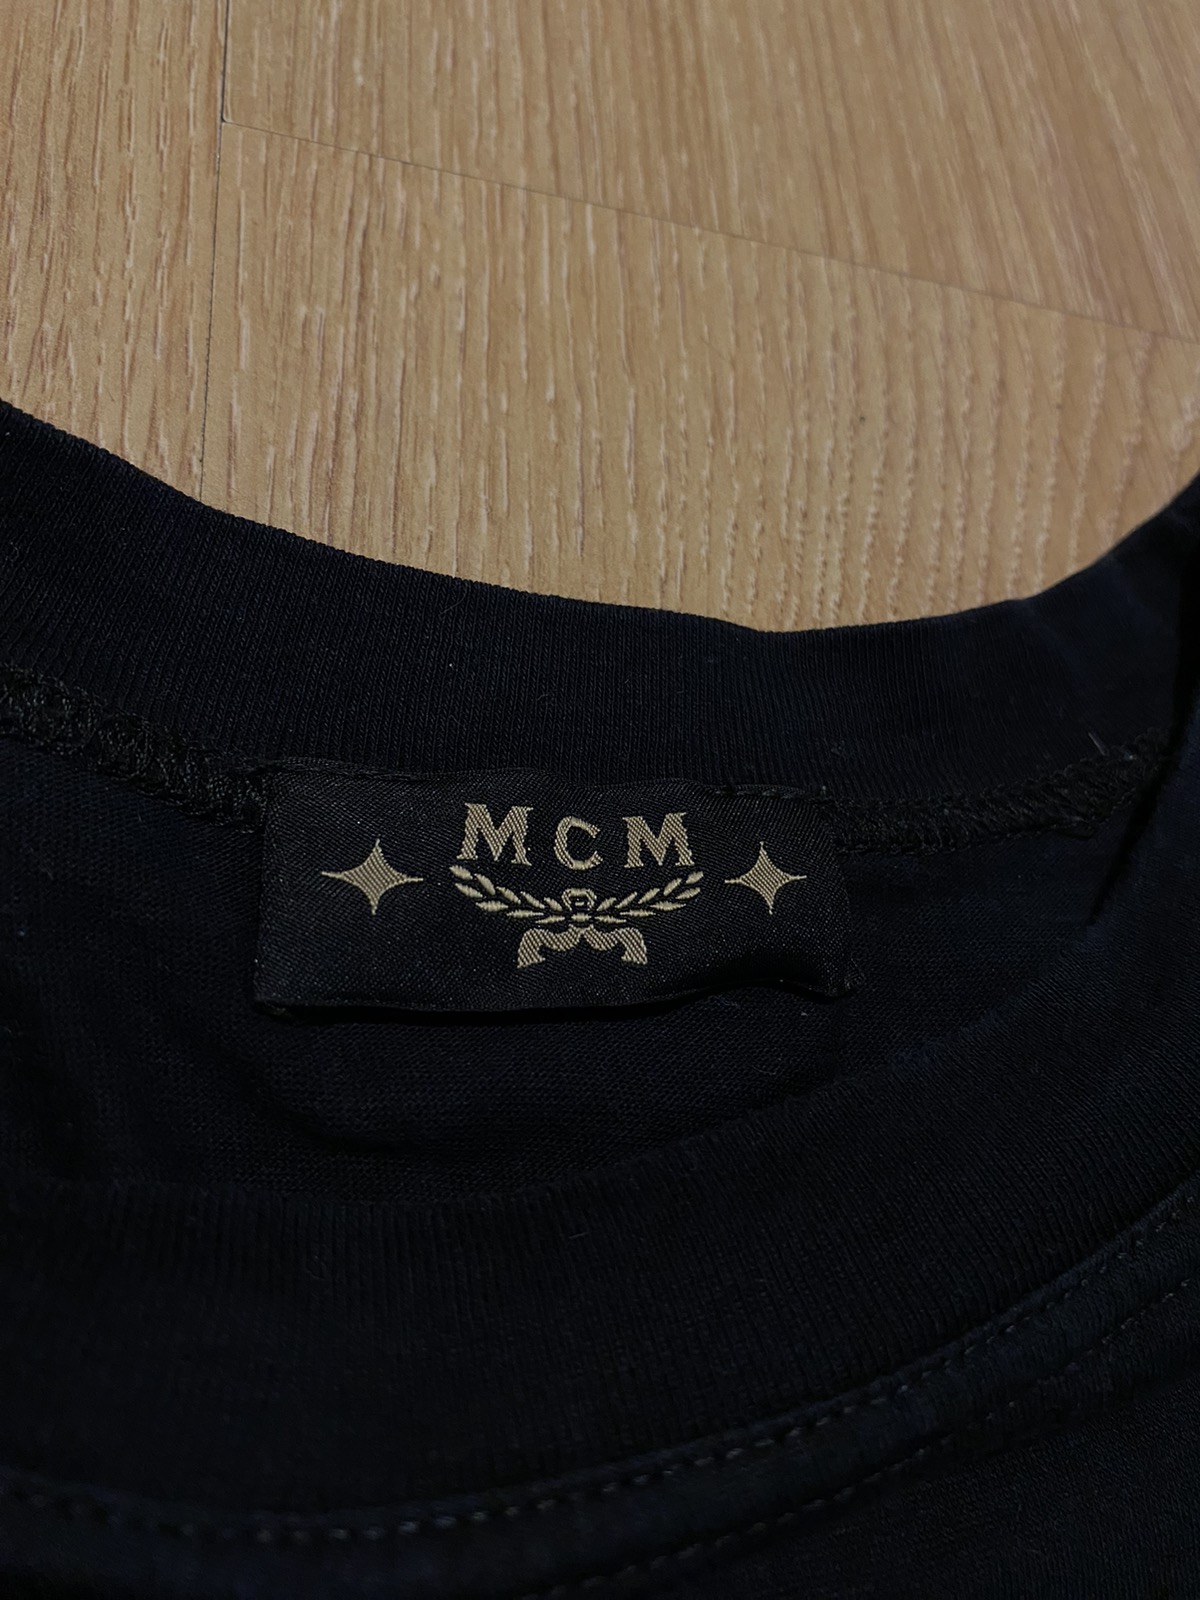 MCM x Swarovski center logo t shirt - 4